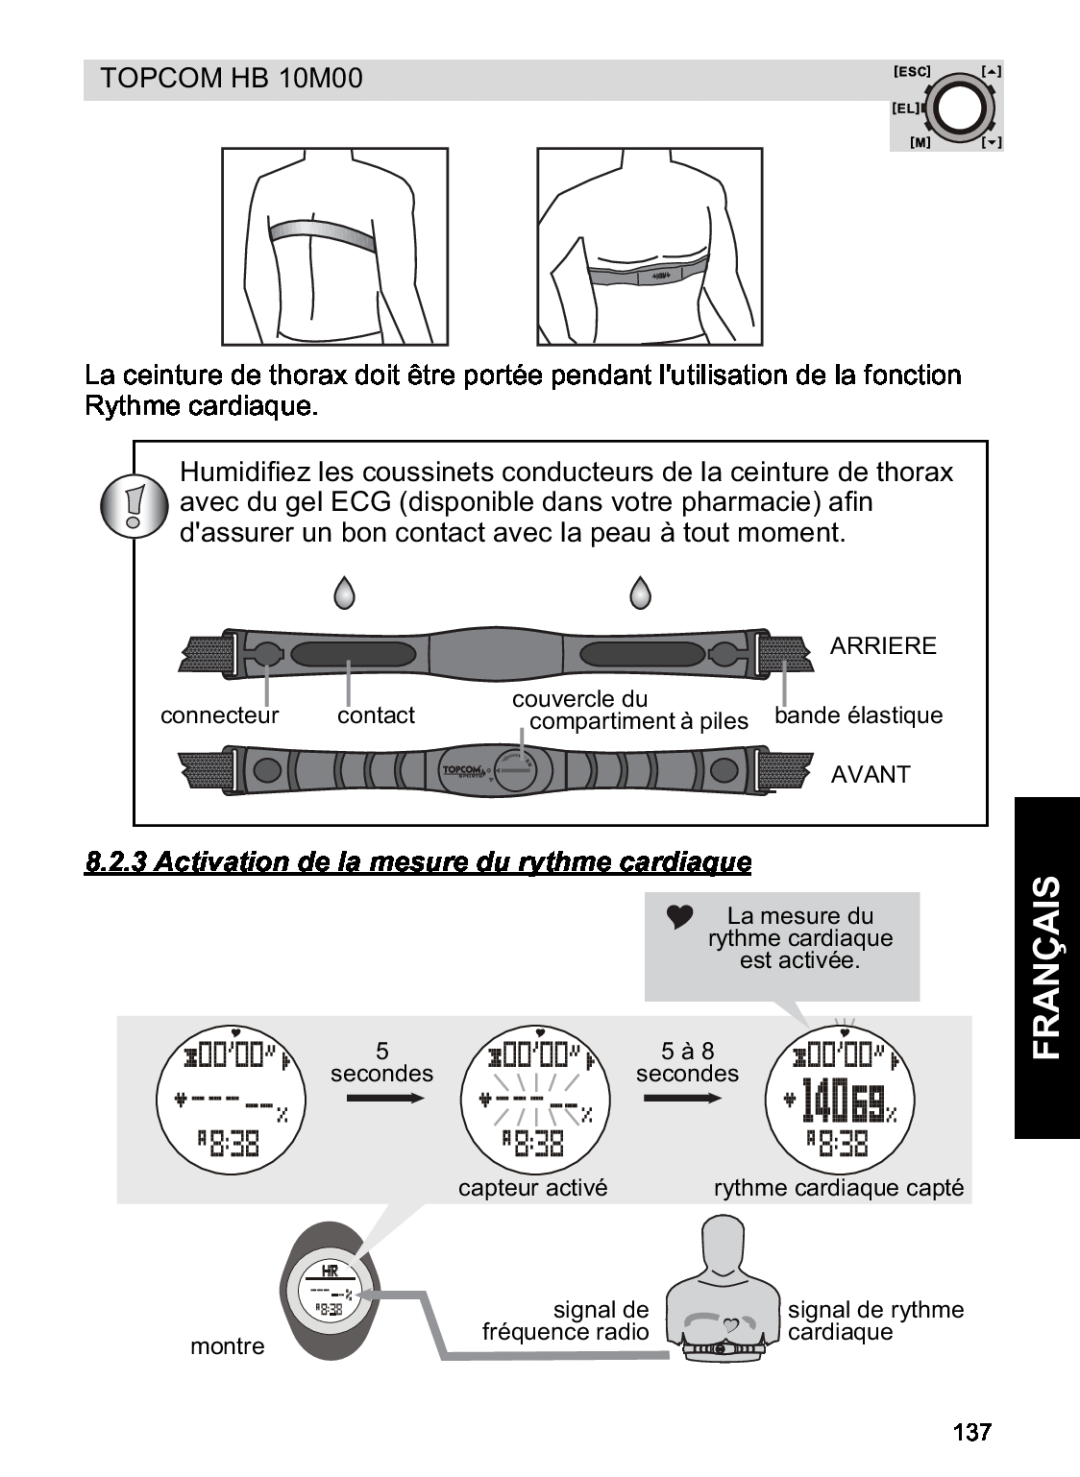 Topcom HB 10M00 manual Activation de la mesure du rythme cardiaque, Français 